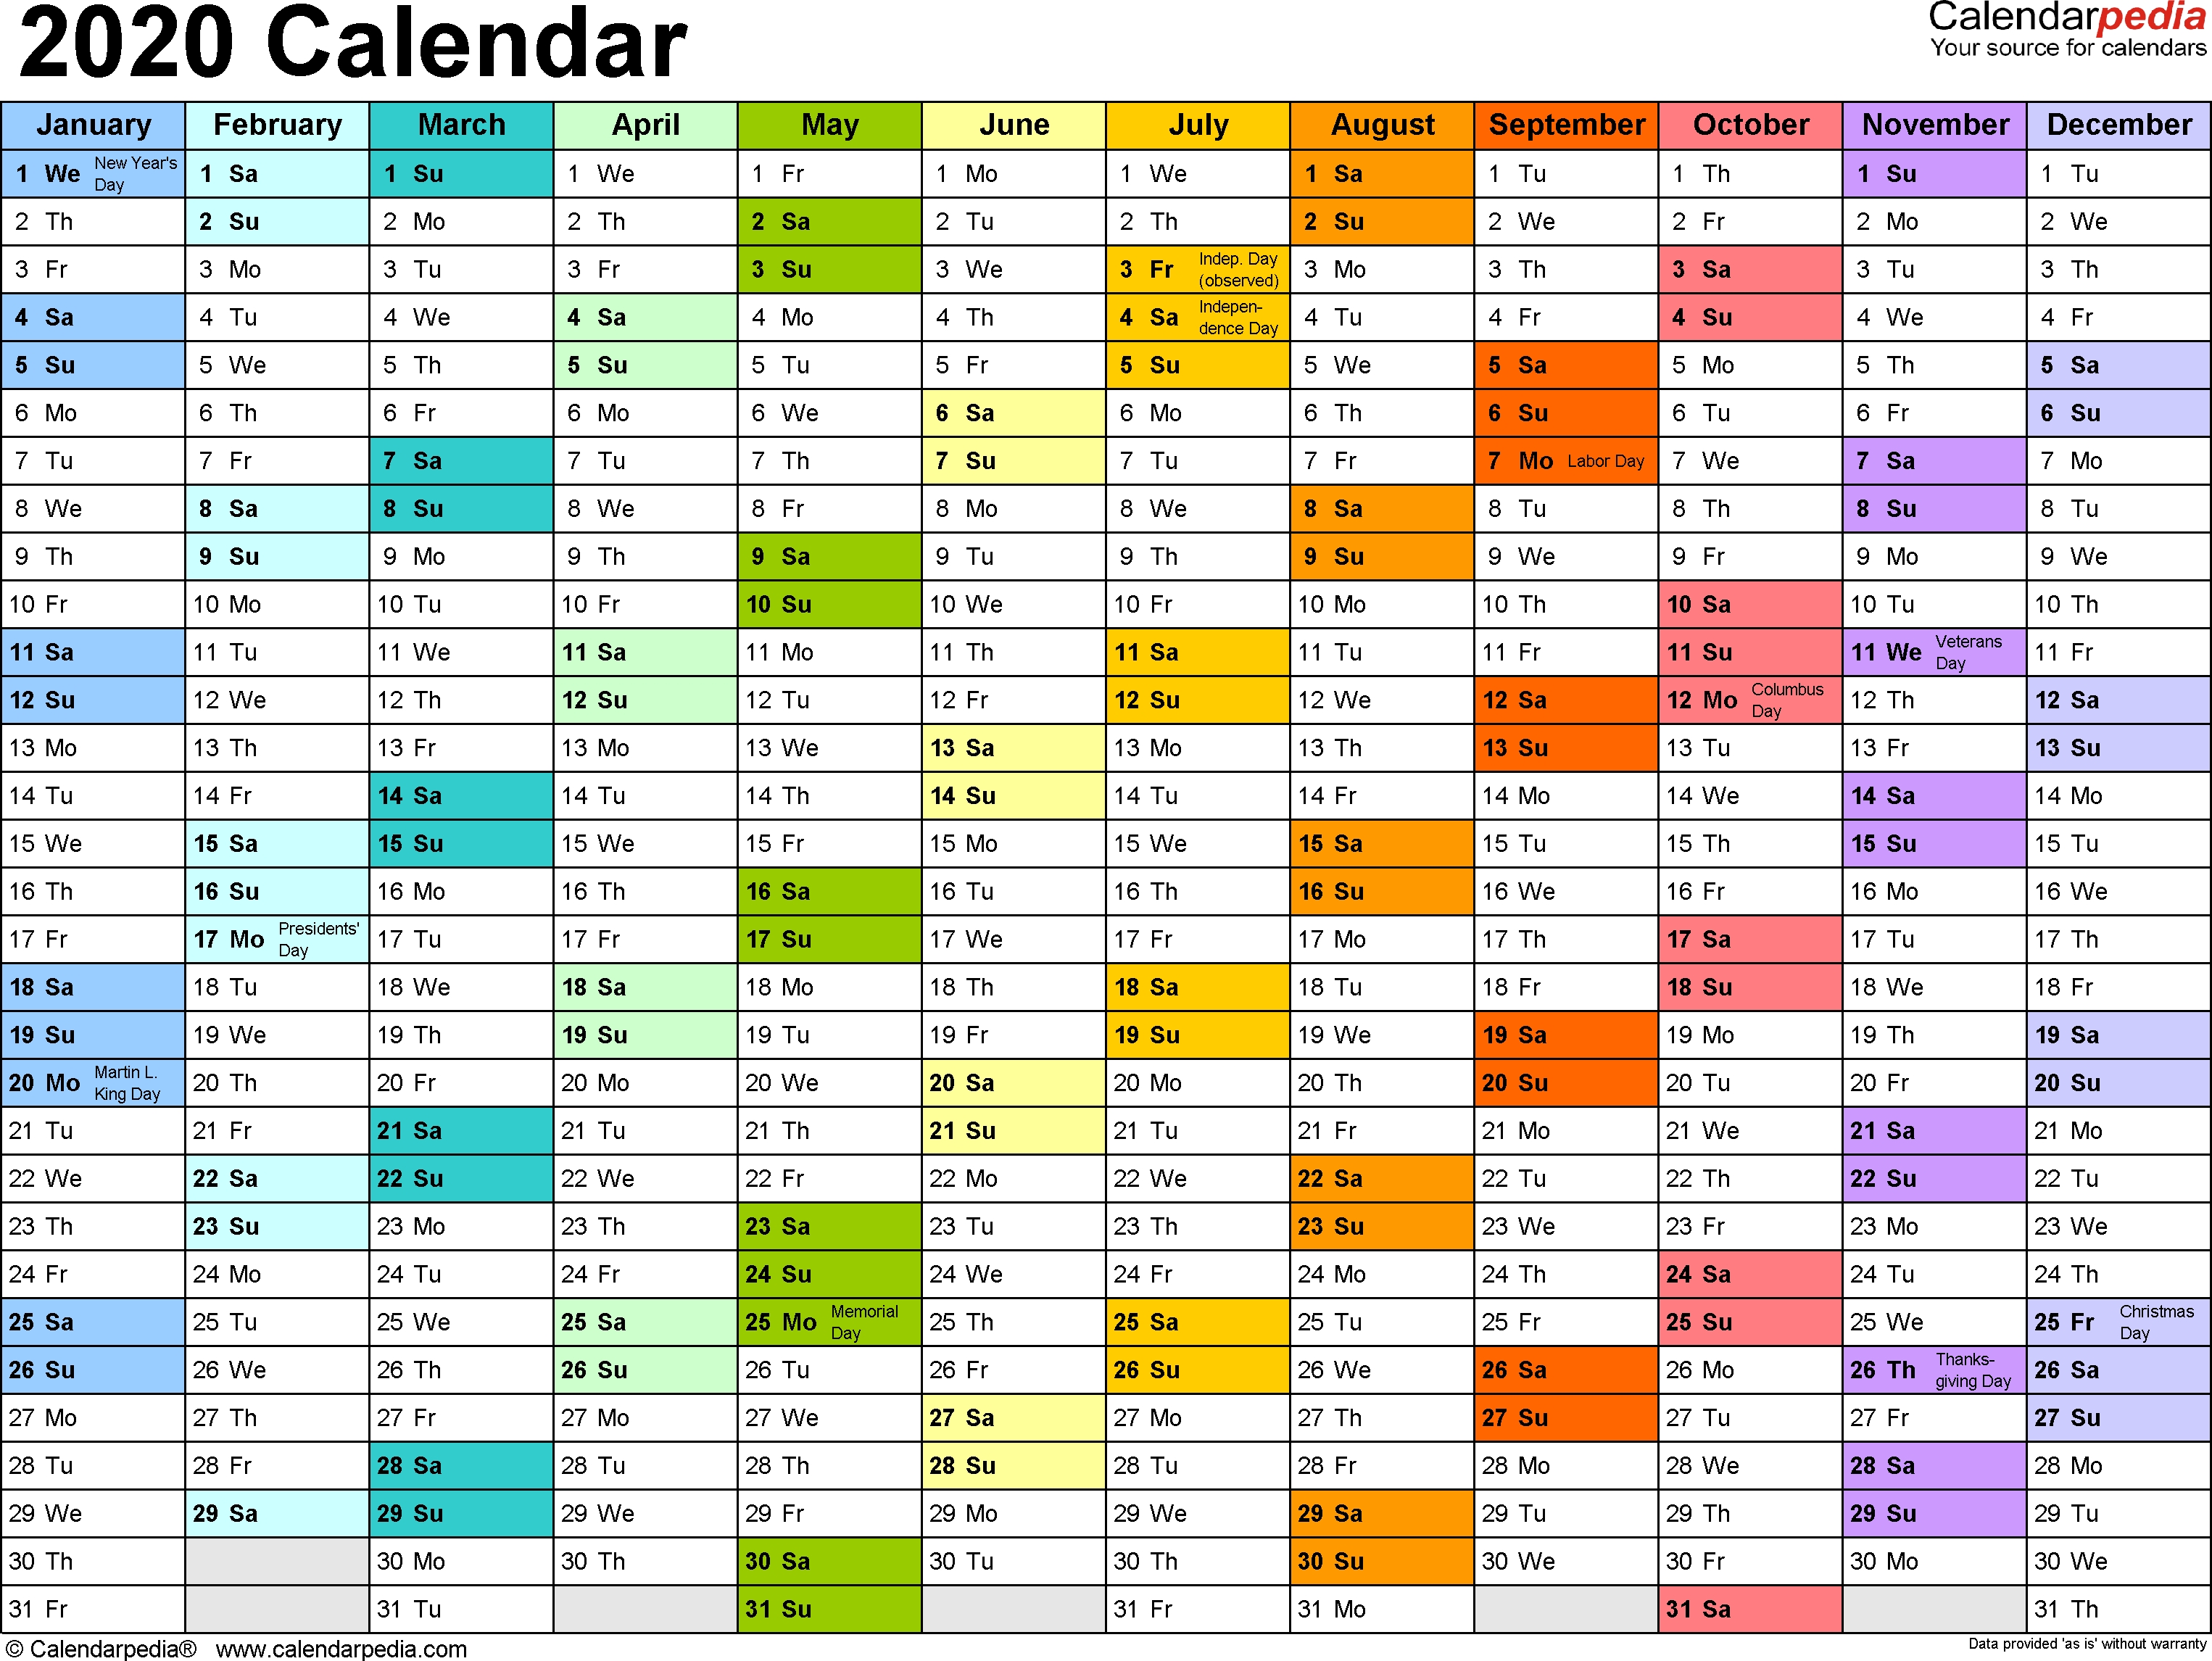 Calendarpedia - Your Source For Calendars-S A Public Holidays 2020